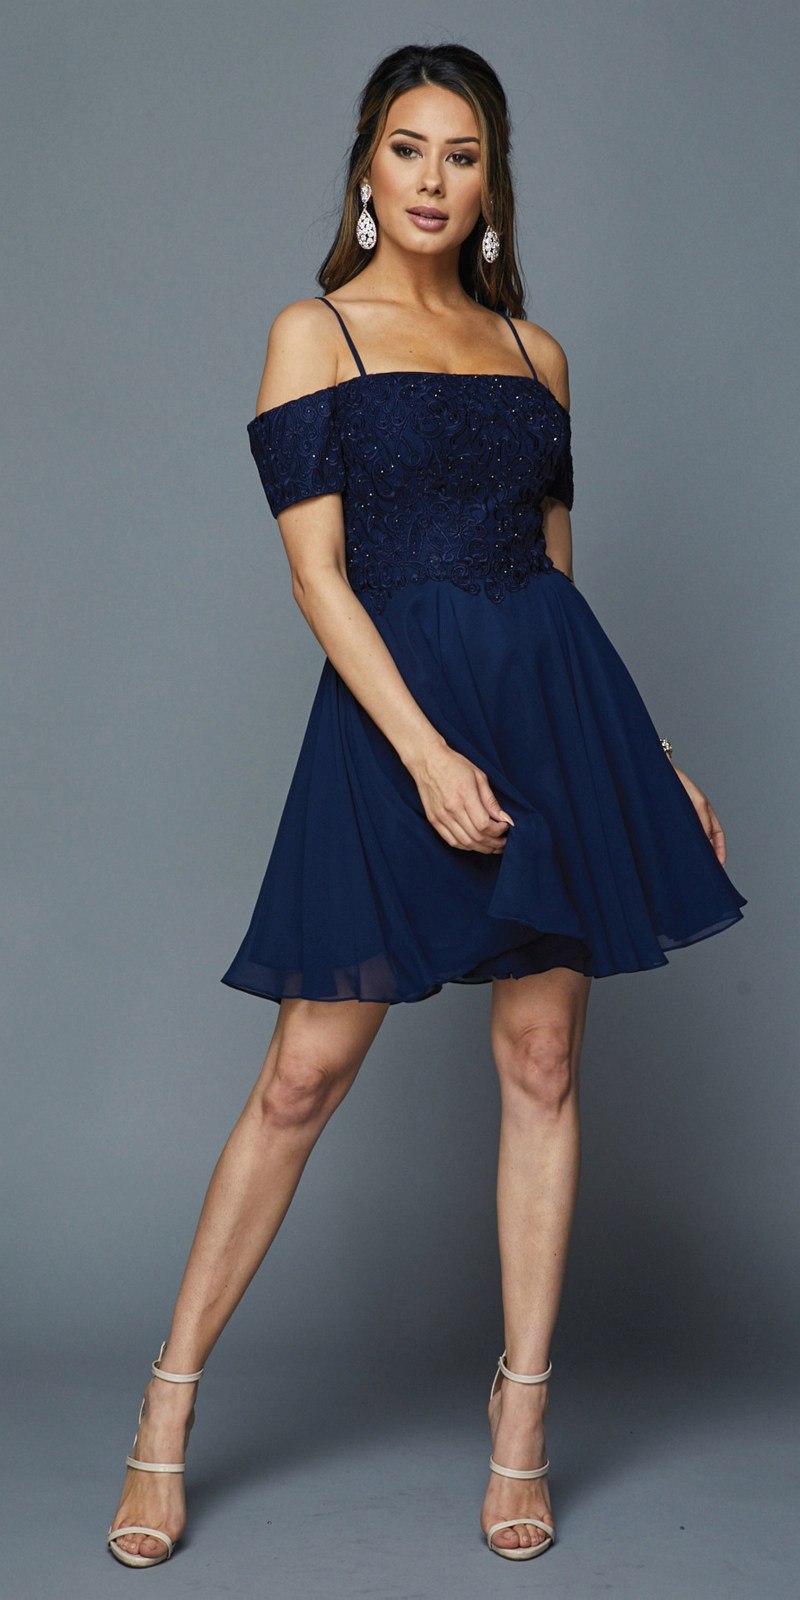 Juliet 814 Navy Blue Homecoming Short Dress with Cold-Shoulder